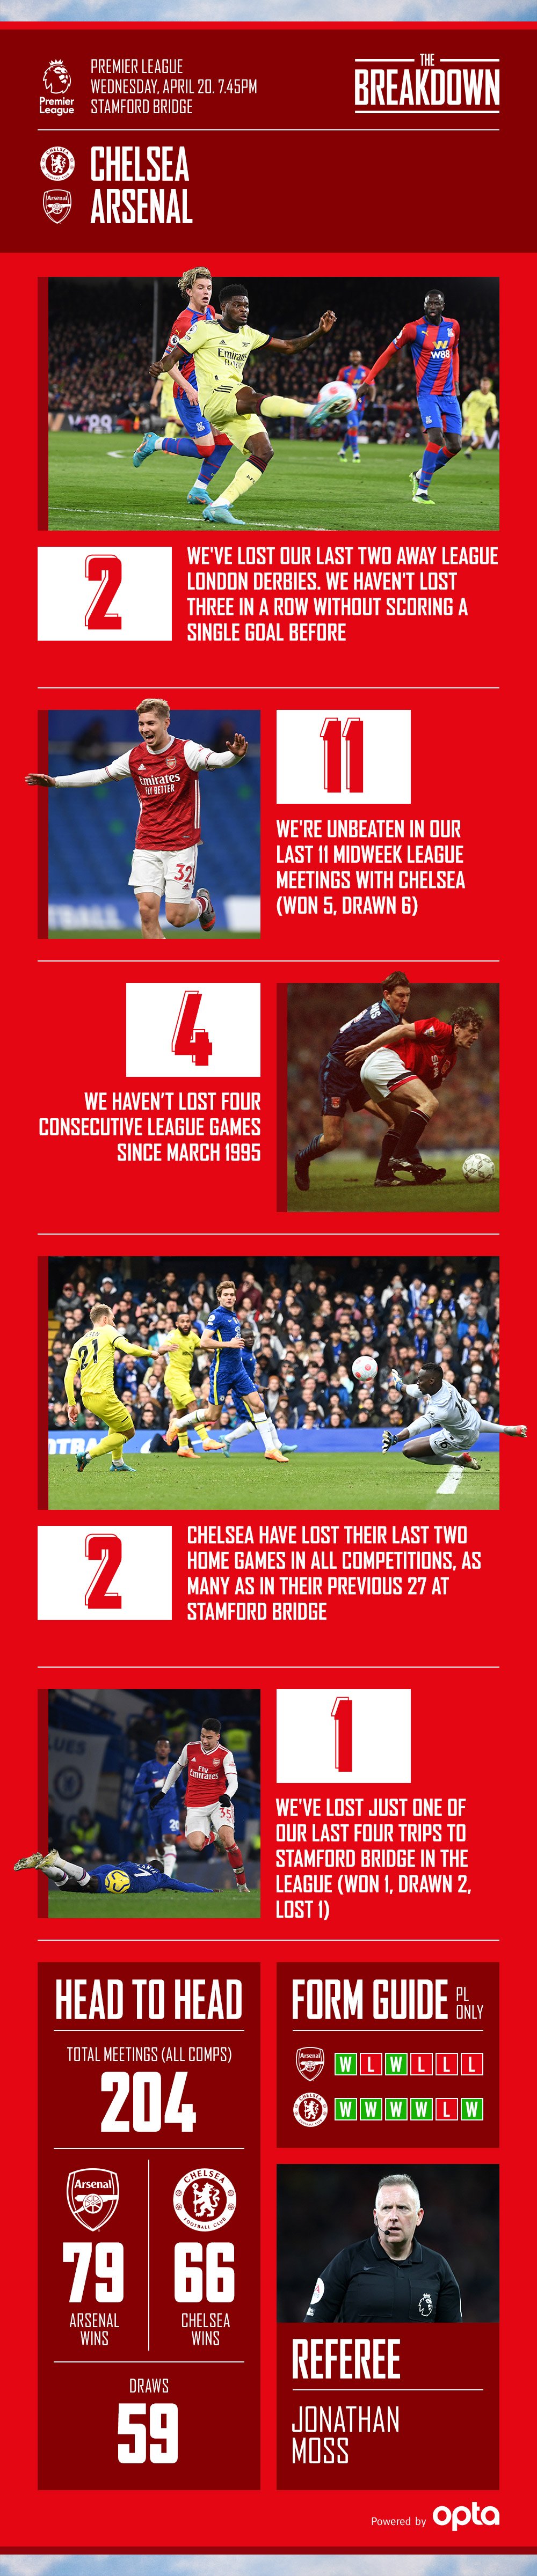 Chelsea vs Arsenal Breakdown